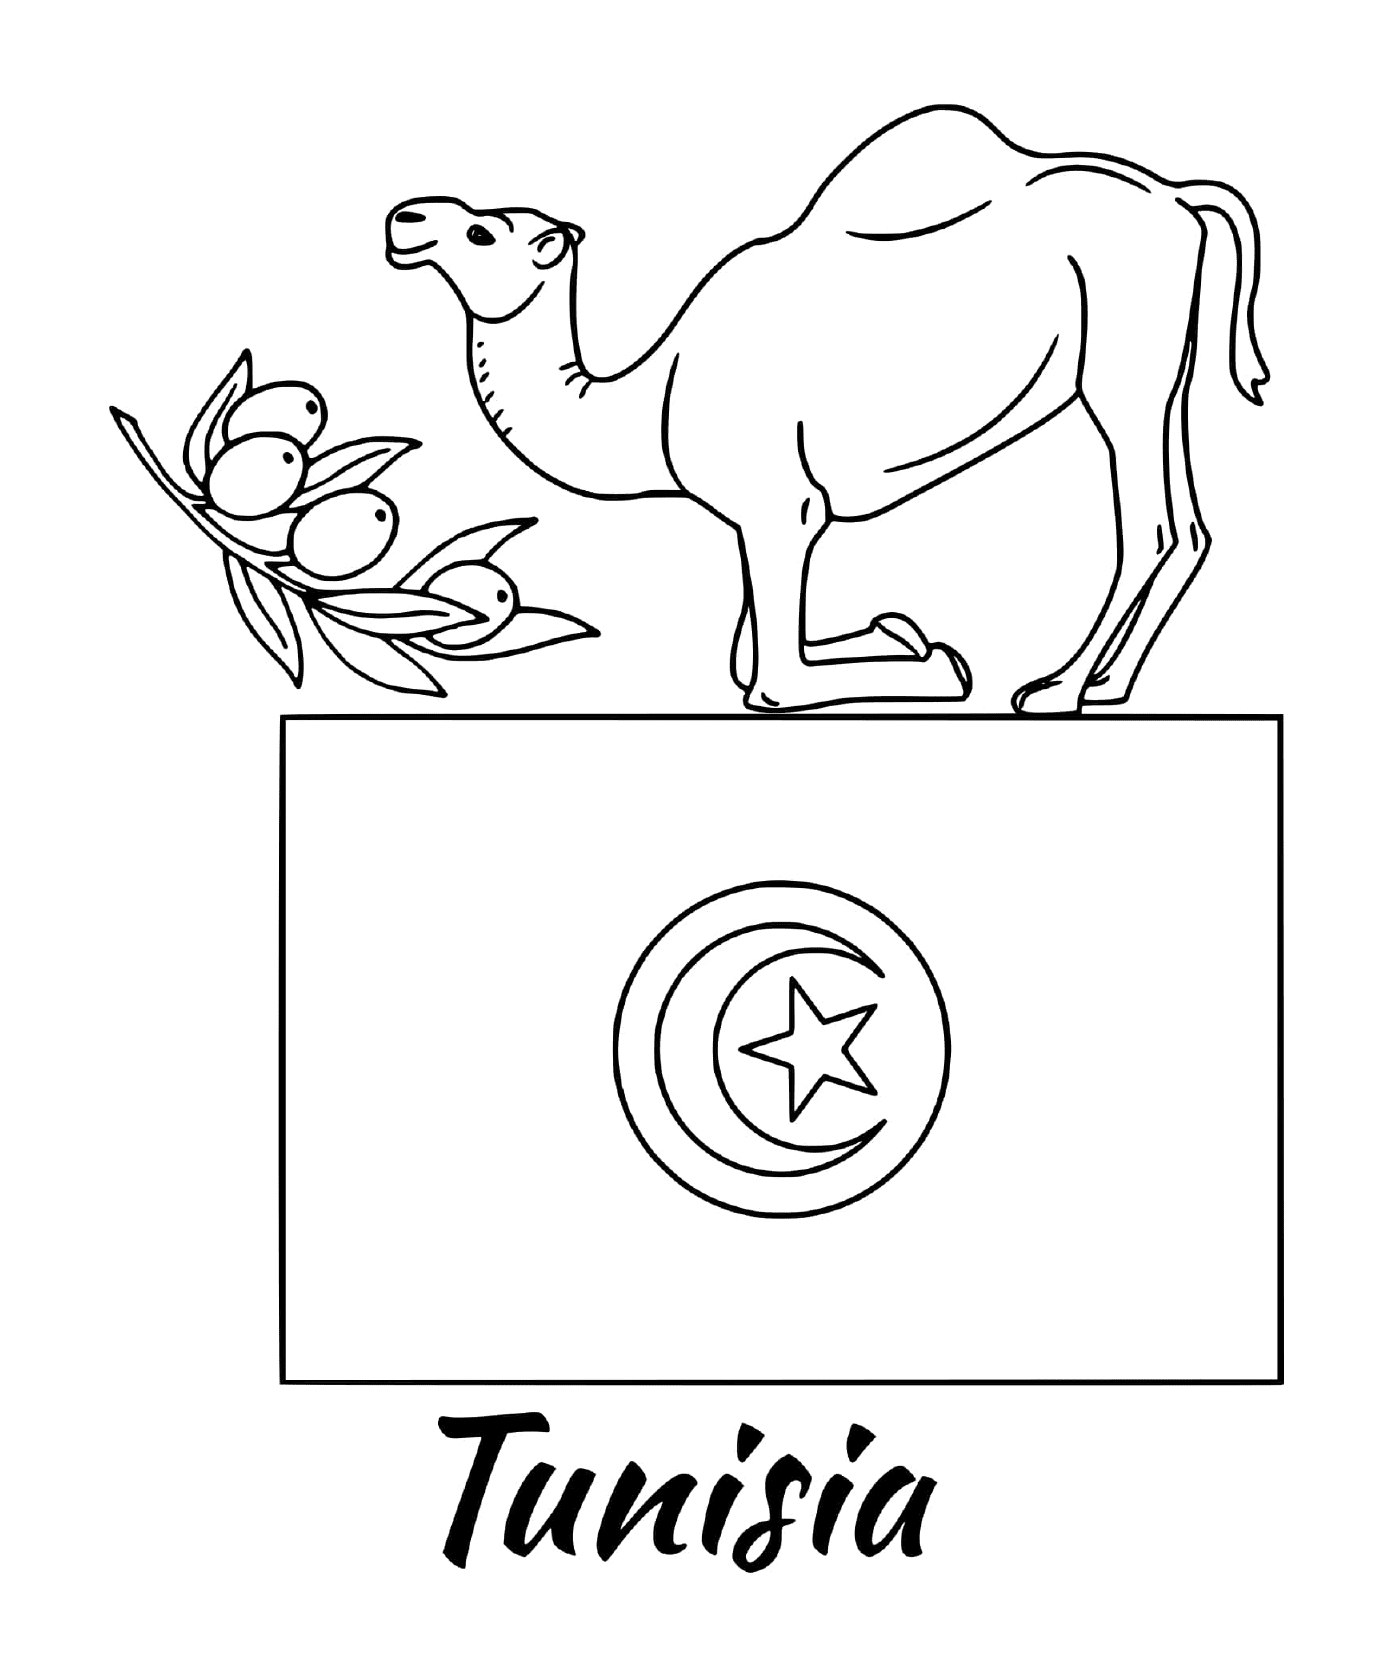  Bandera de Túnez con camello 